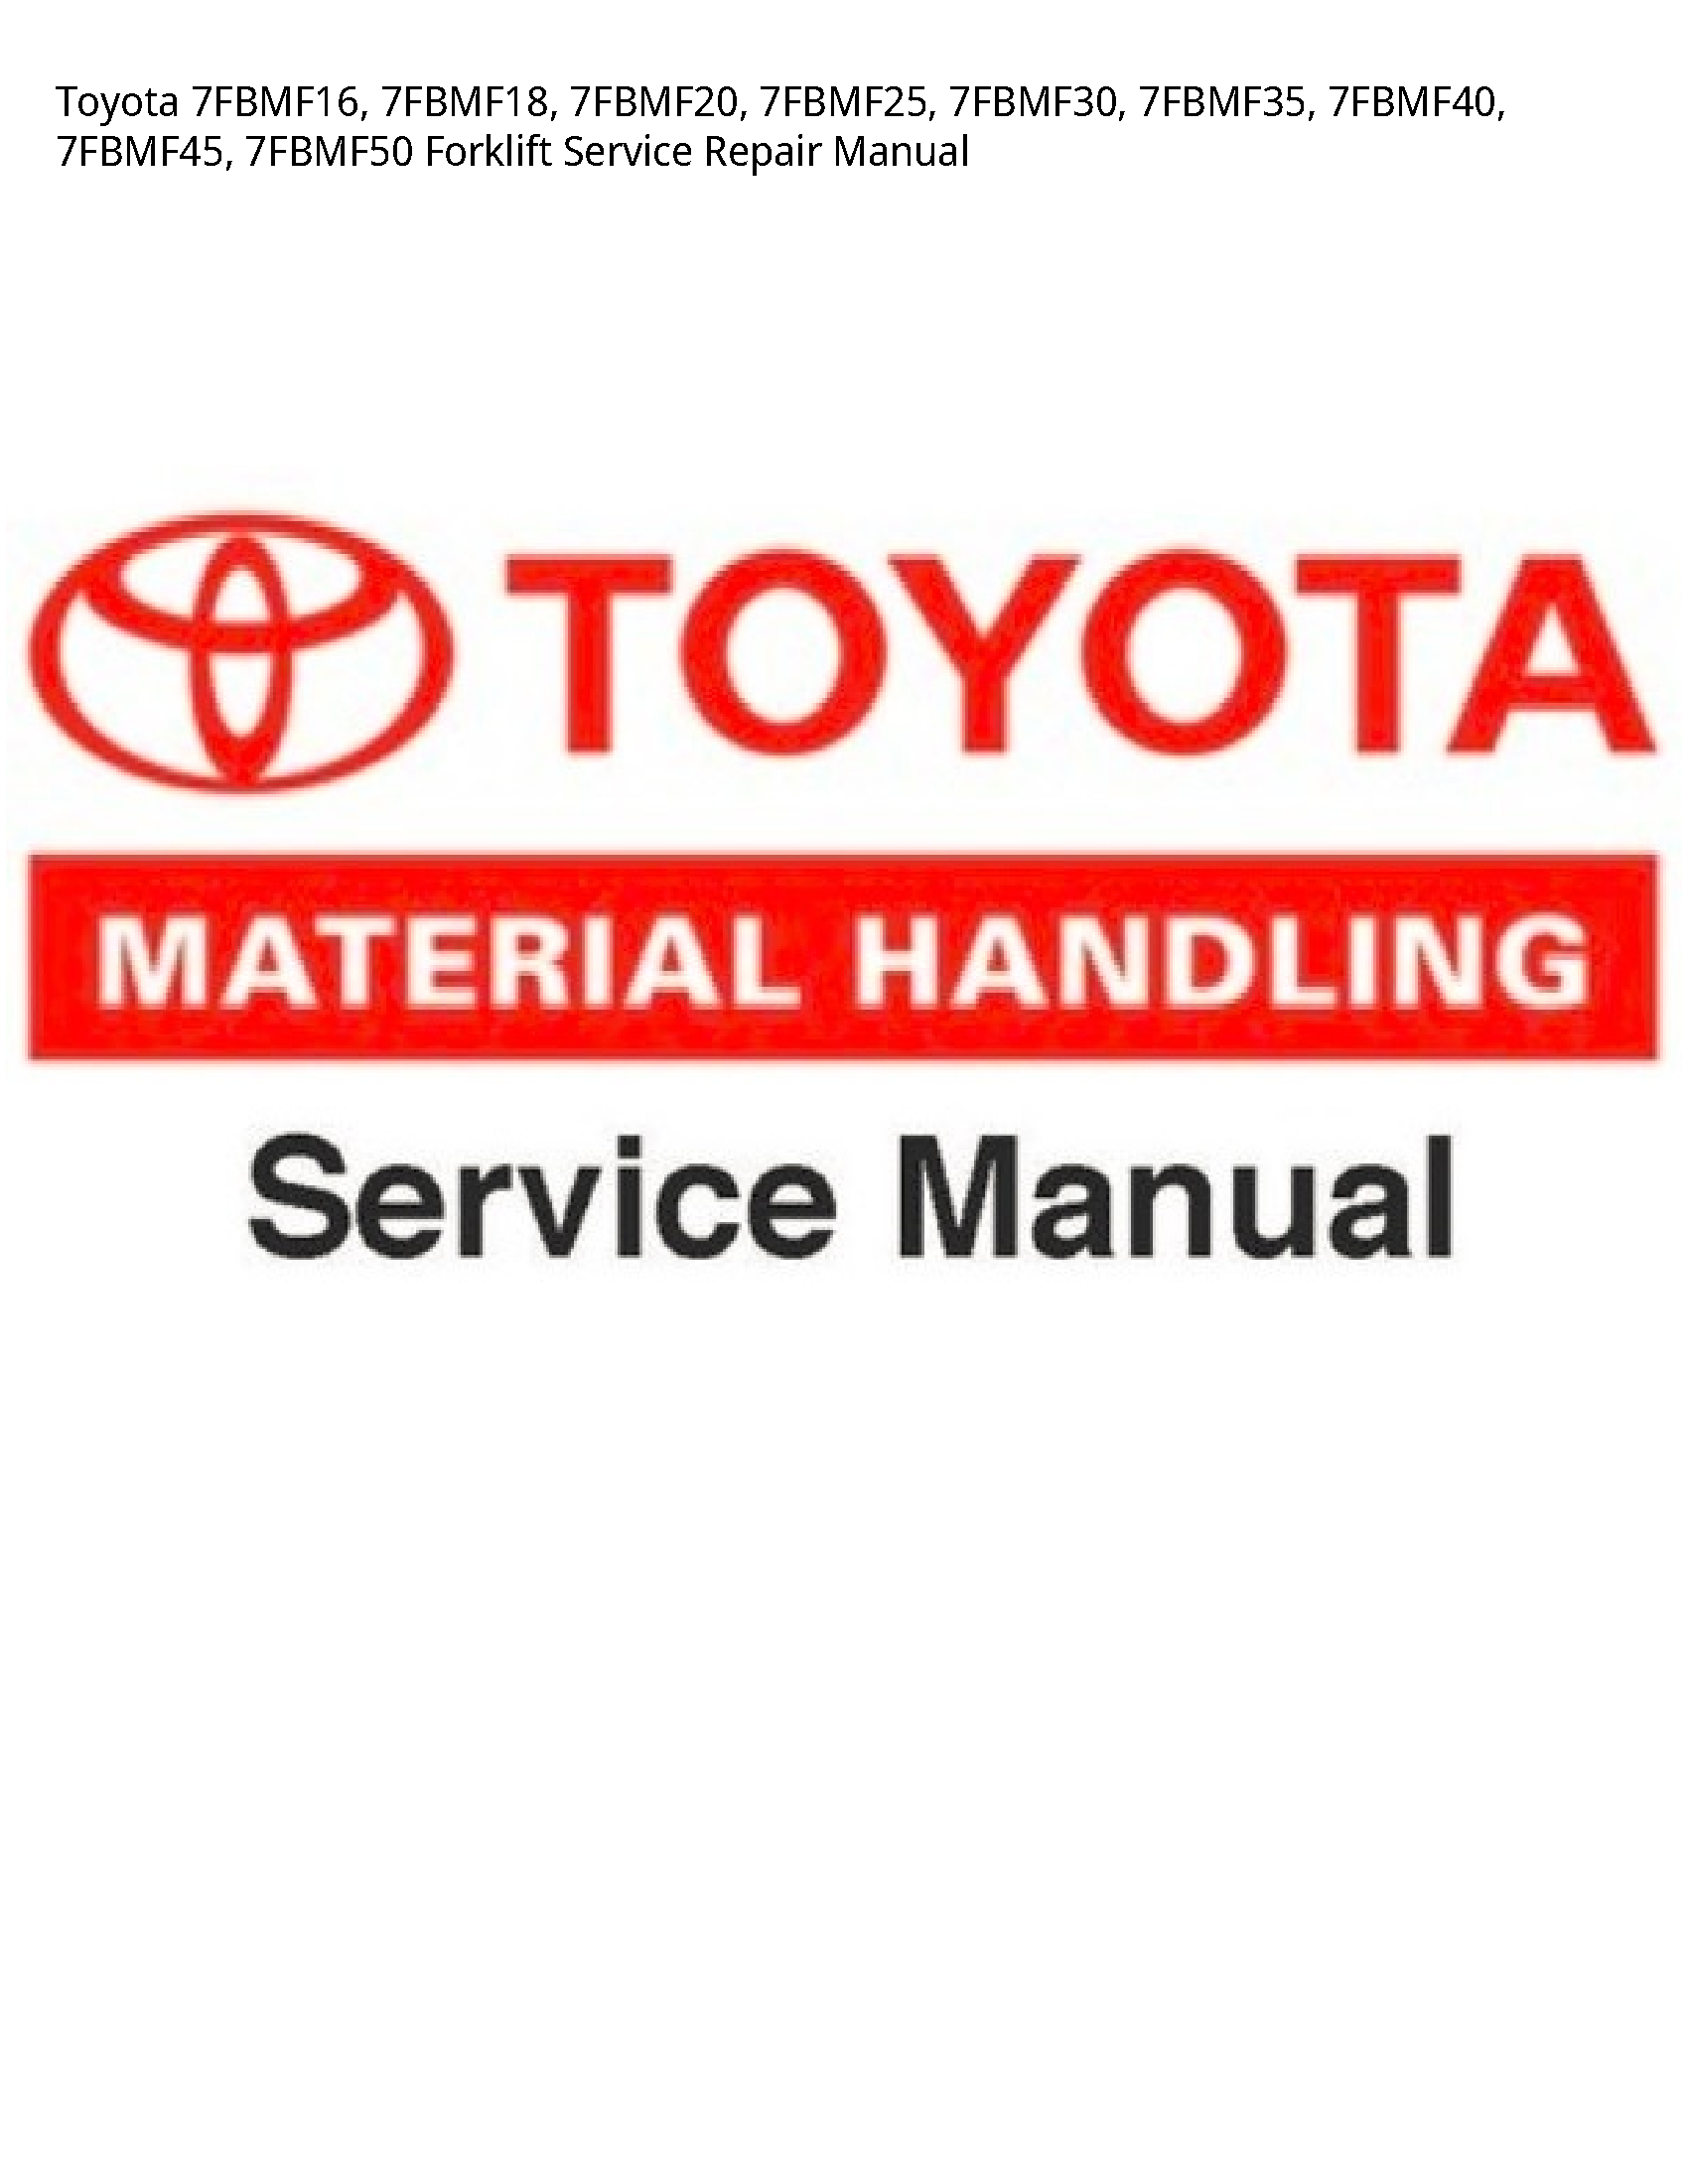 Toyota 7FBMF16 Forklift manual